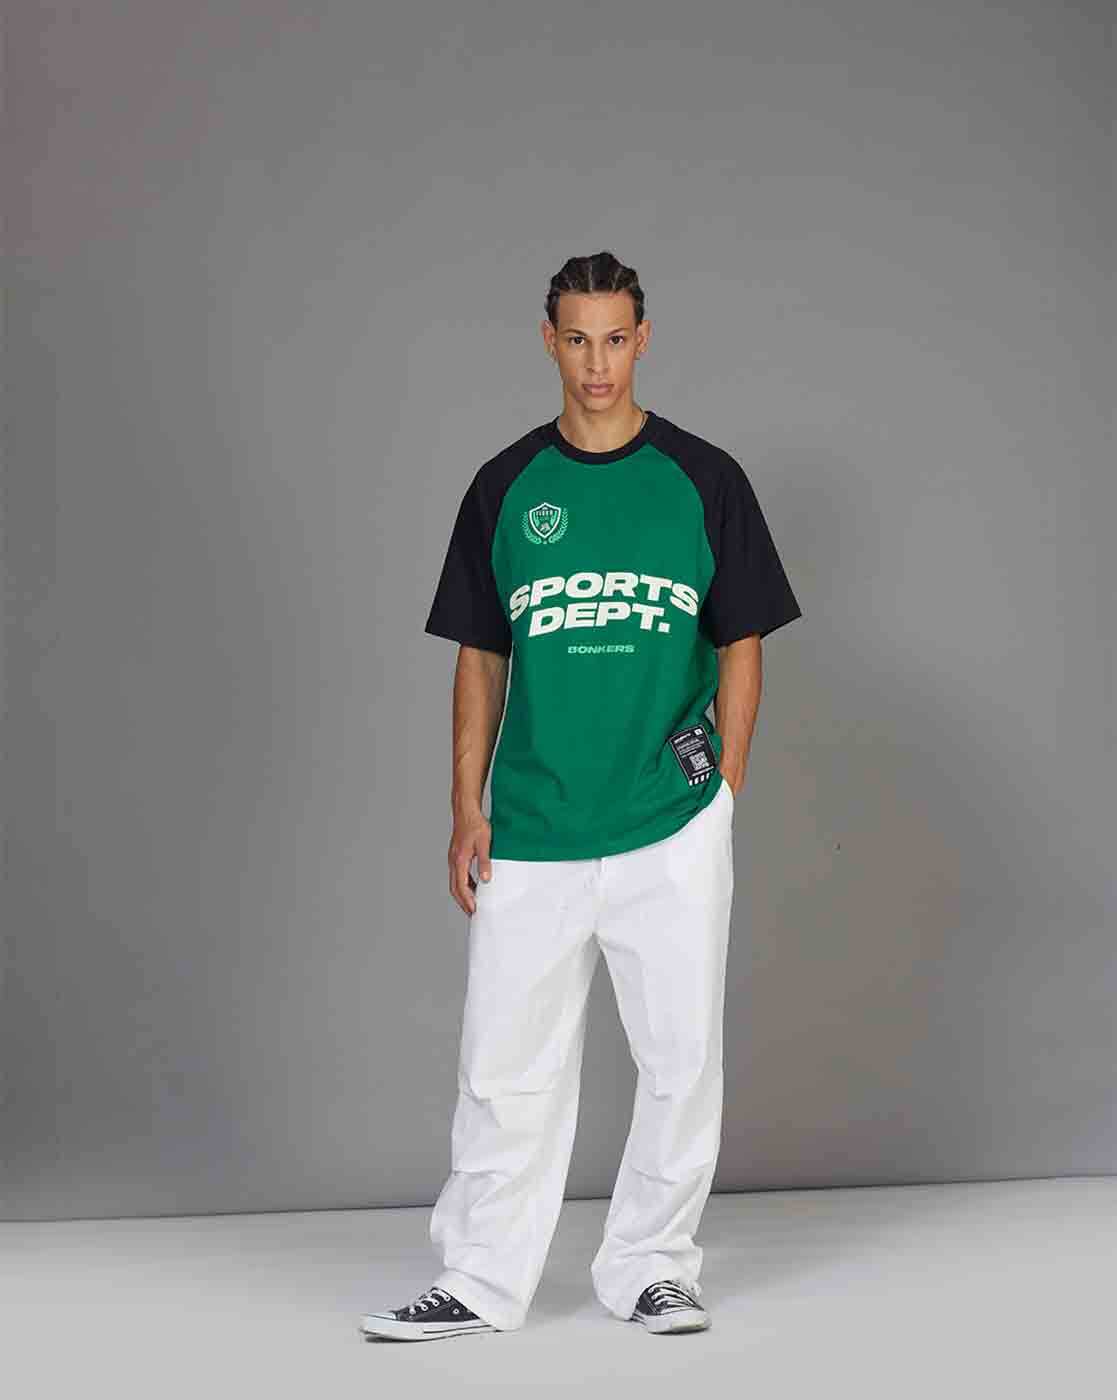 Buy Bonkers Corner Men Green Typography Printed Raw Edge Loose T Shirt -  Tshirts for Men 22517430